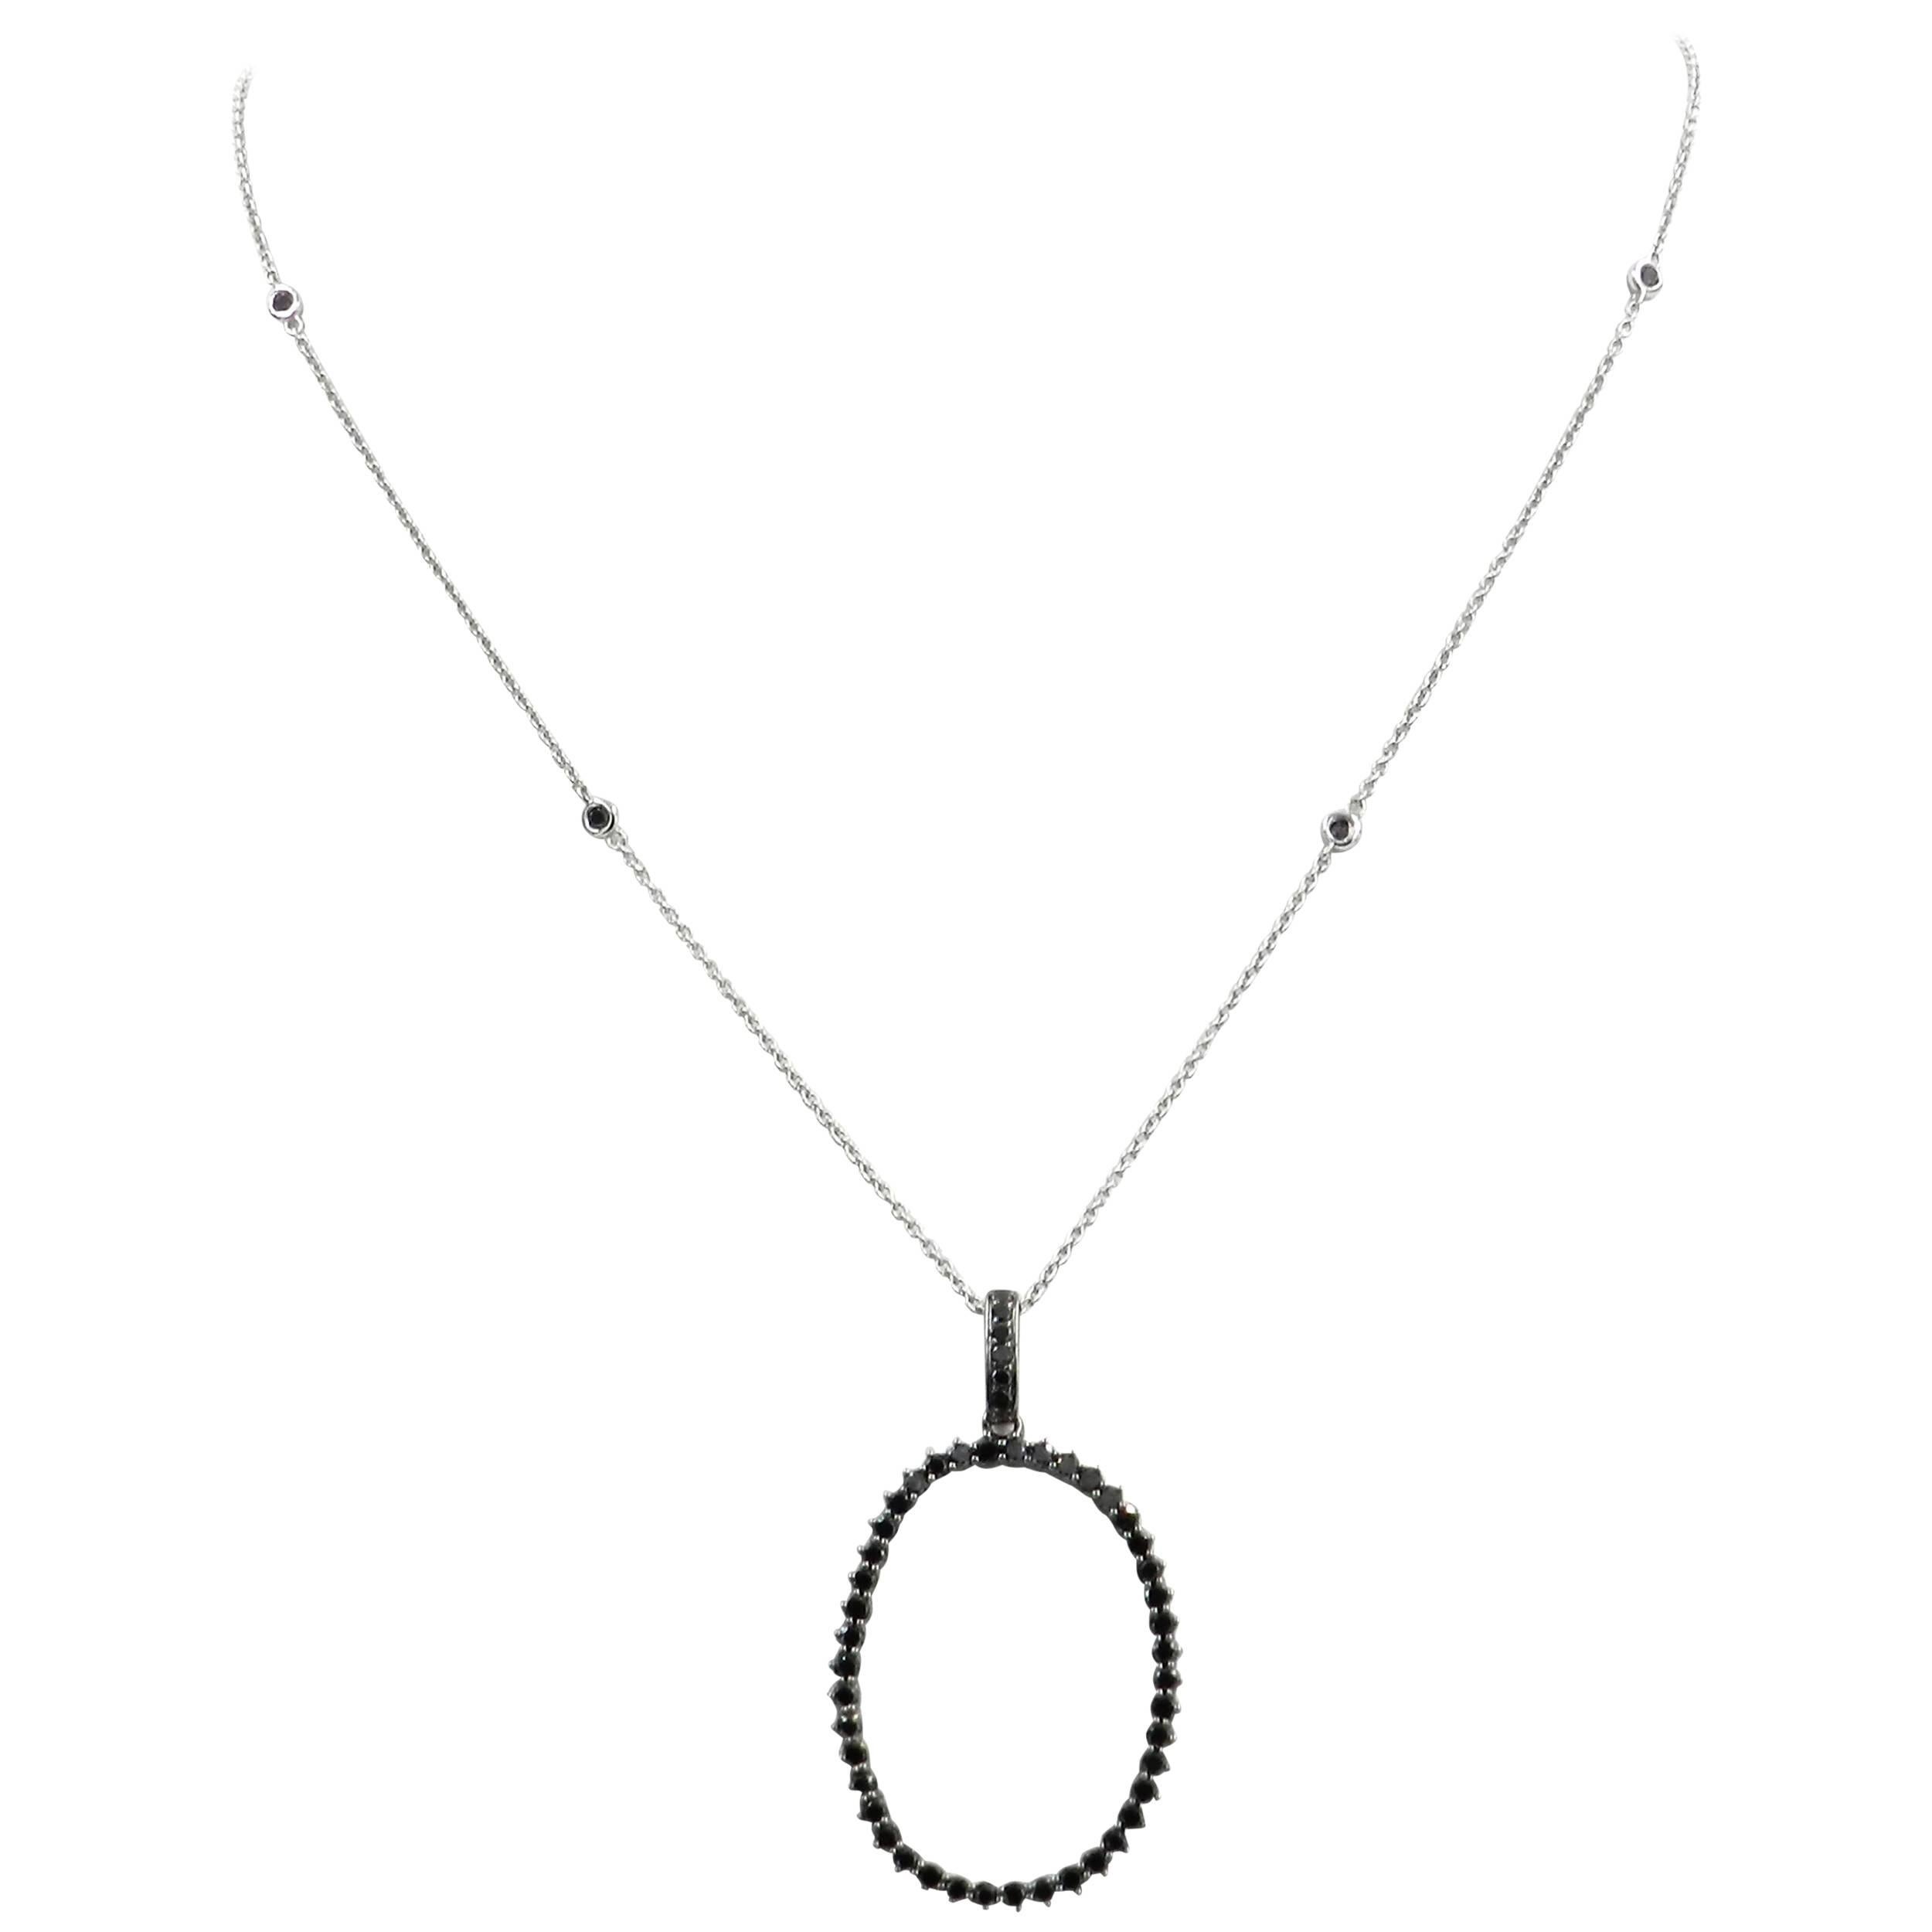 18 Karat White Gold Garavelli Necklace with Black Diamonds